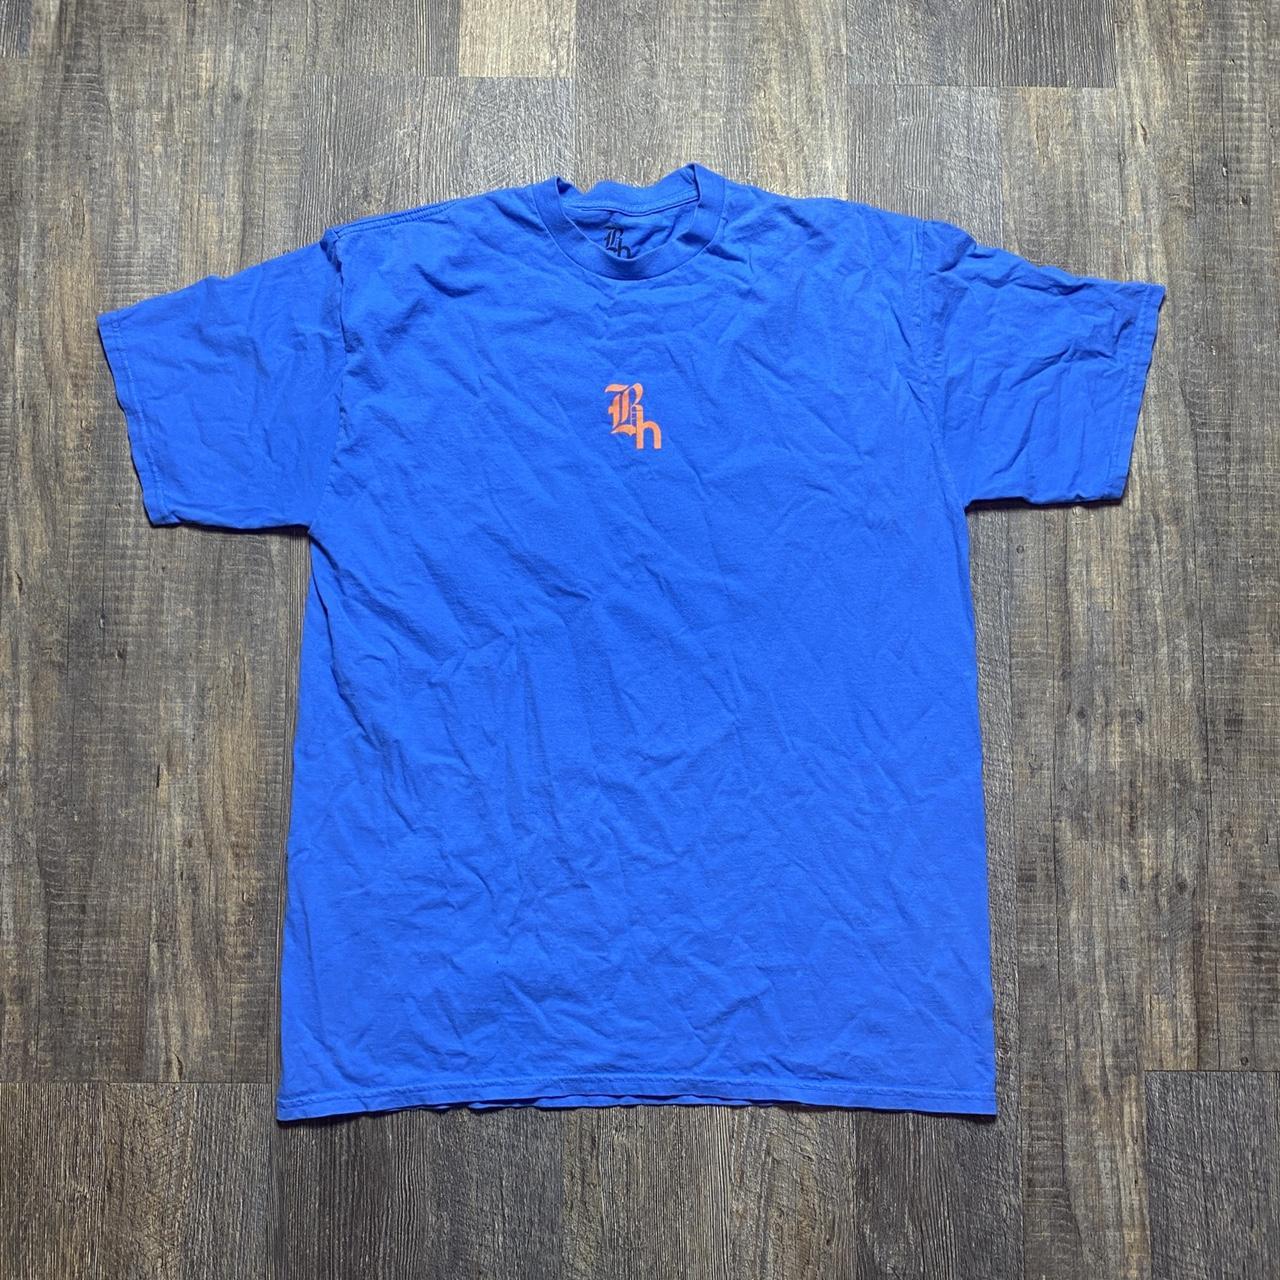 Brockhampton Men's Blue and Orange T-shirt (2)